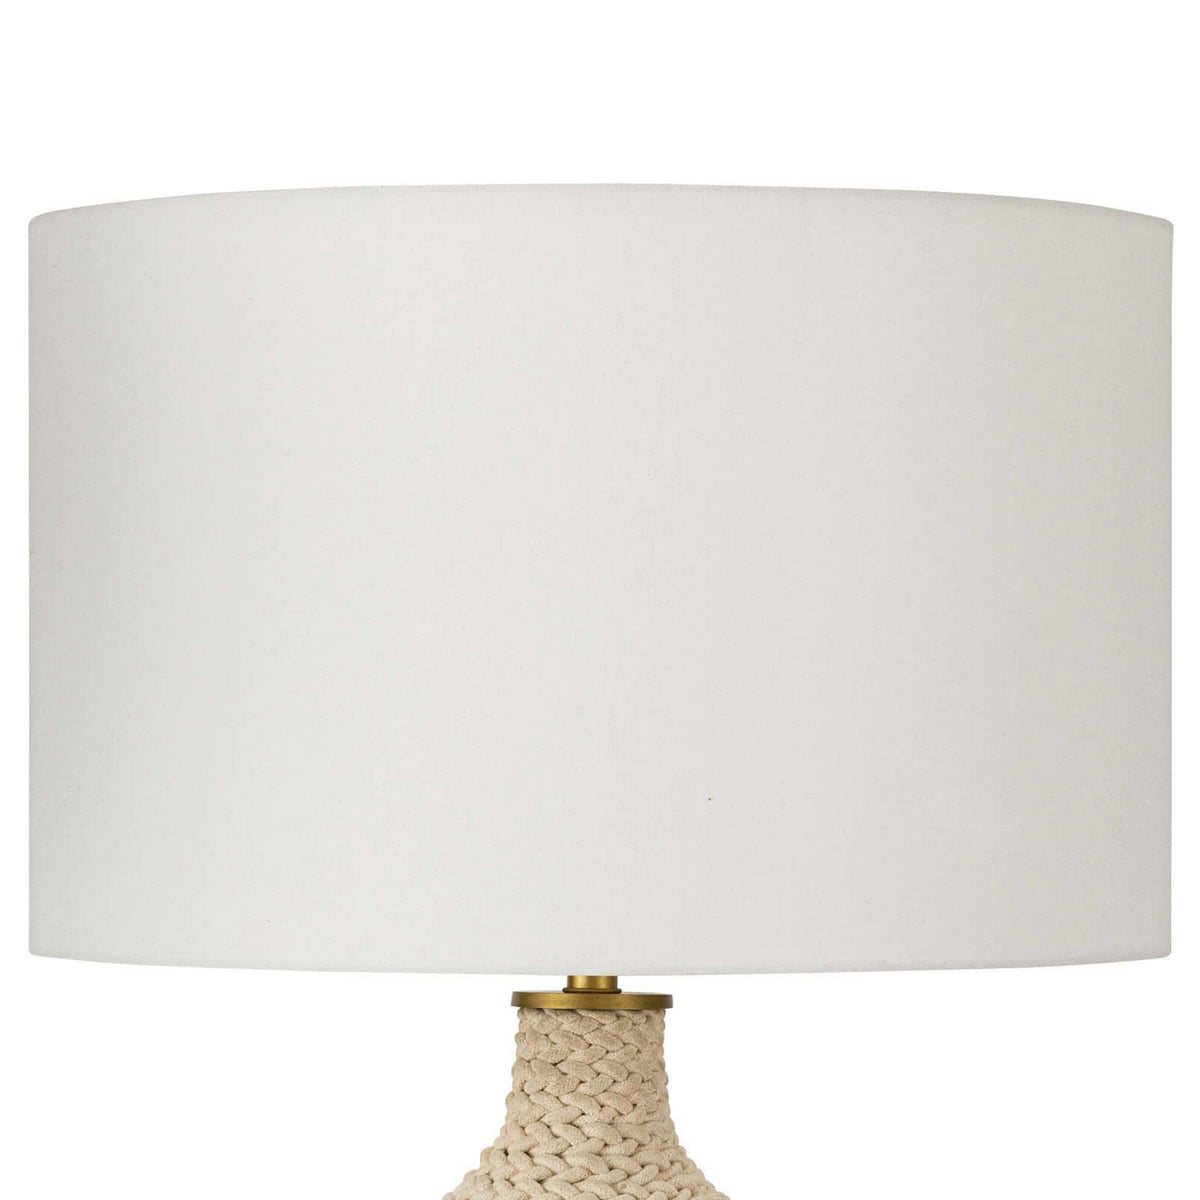 Regina Andrew - 13-1381 - One Light Table Lamp - Biscayne - Natural